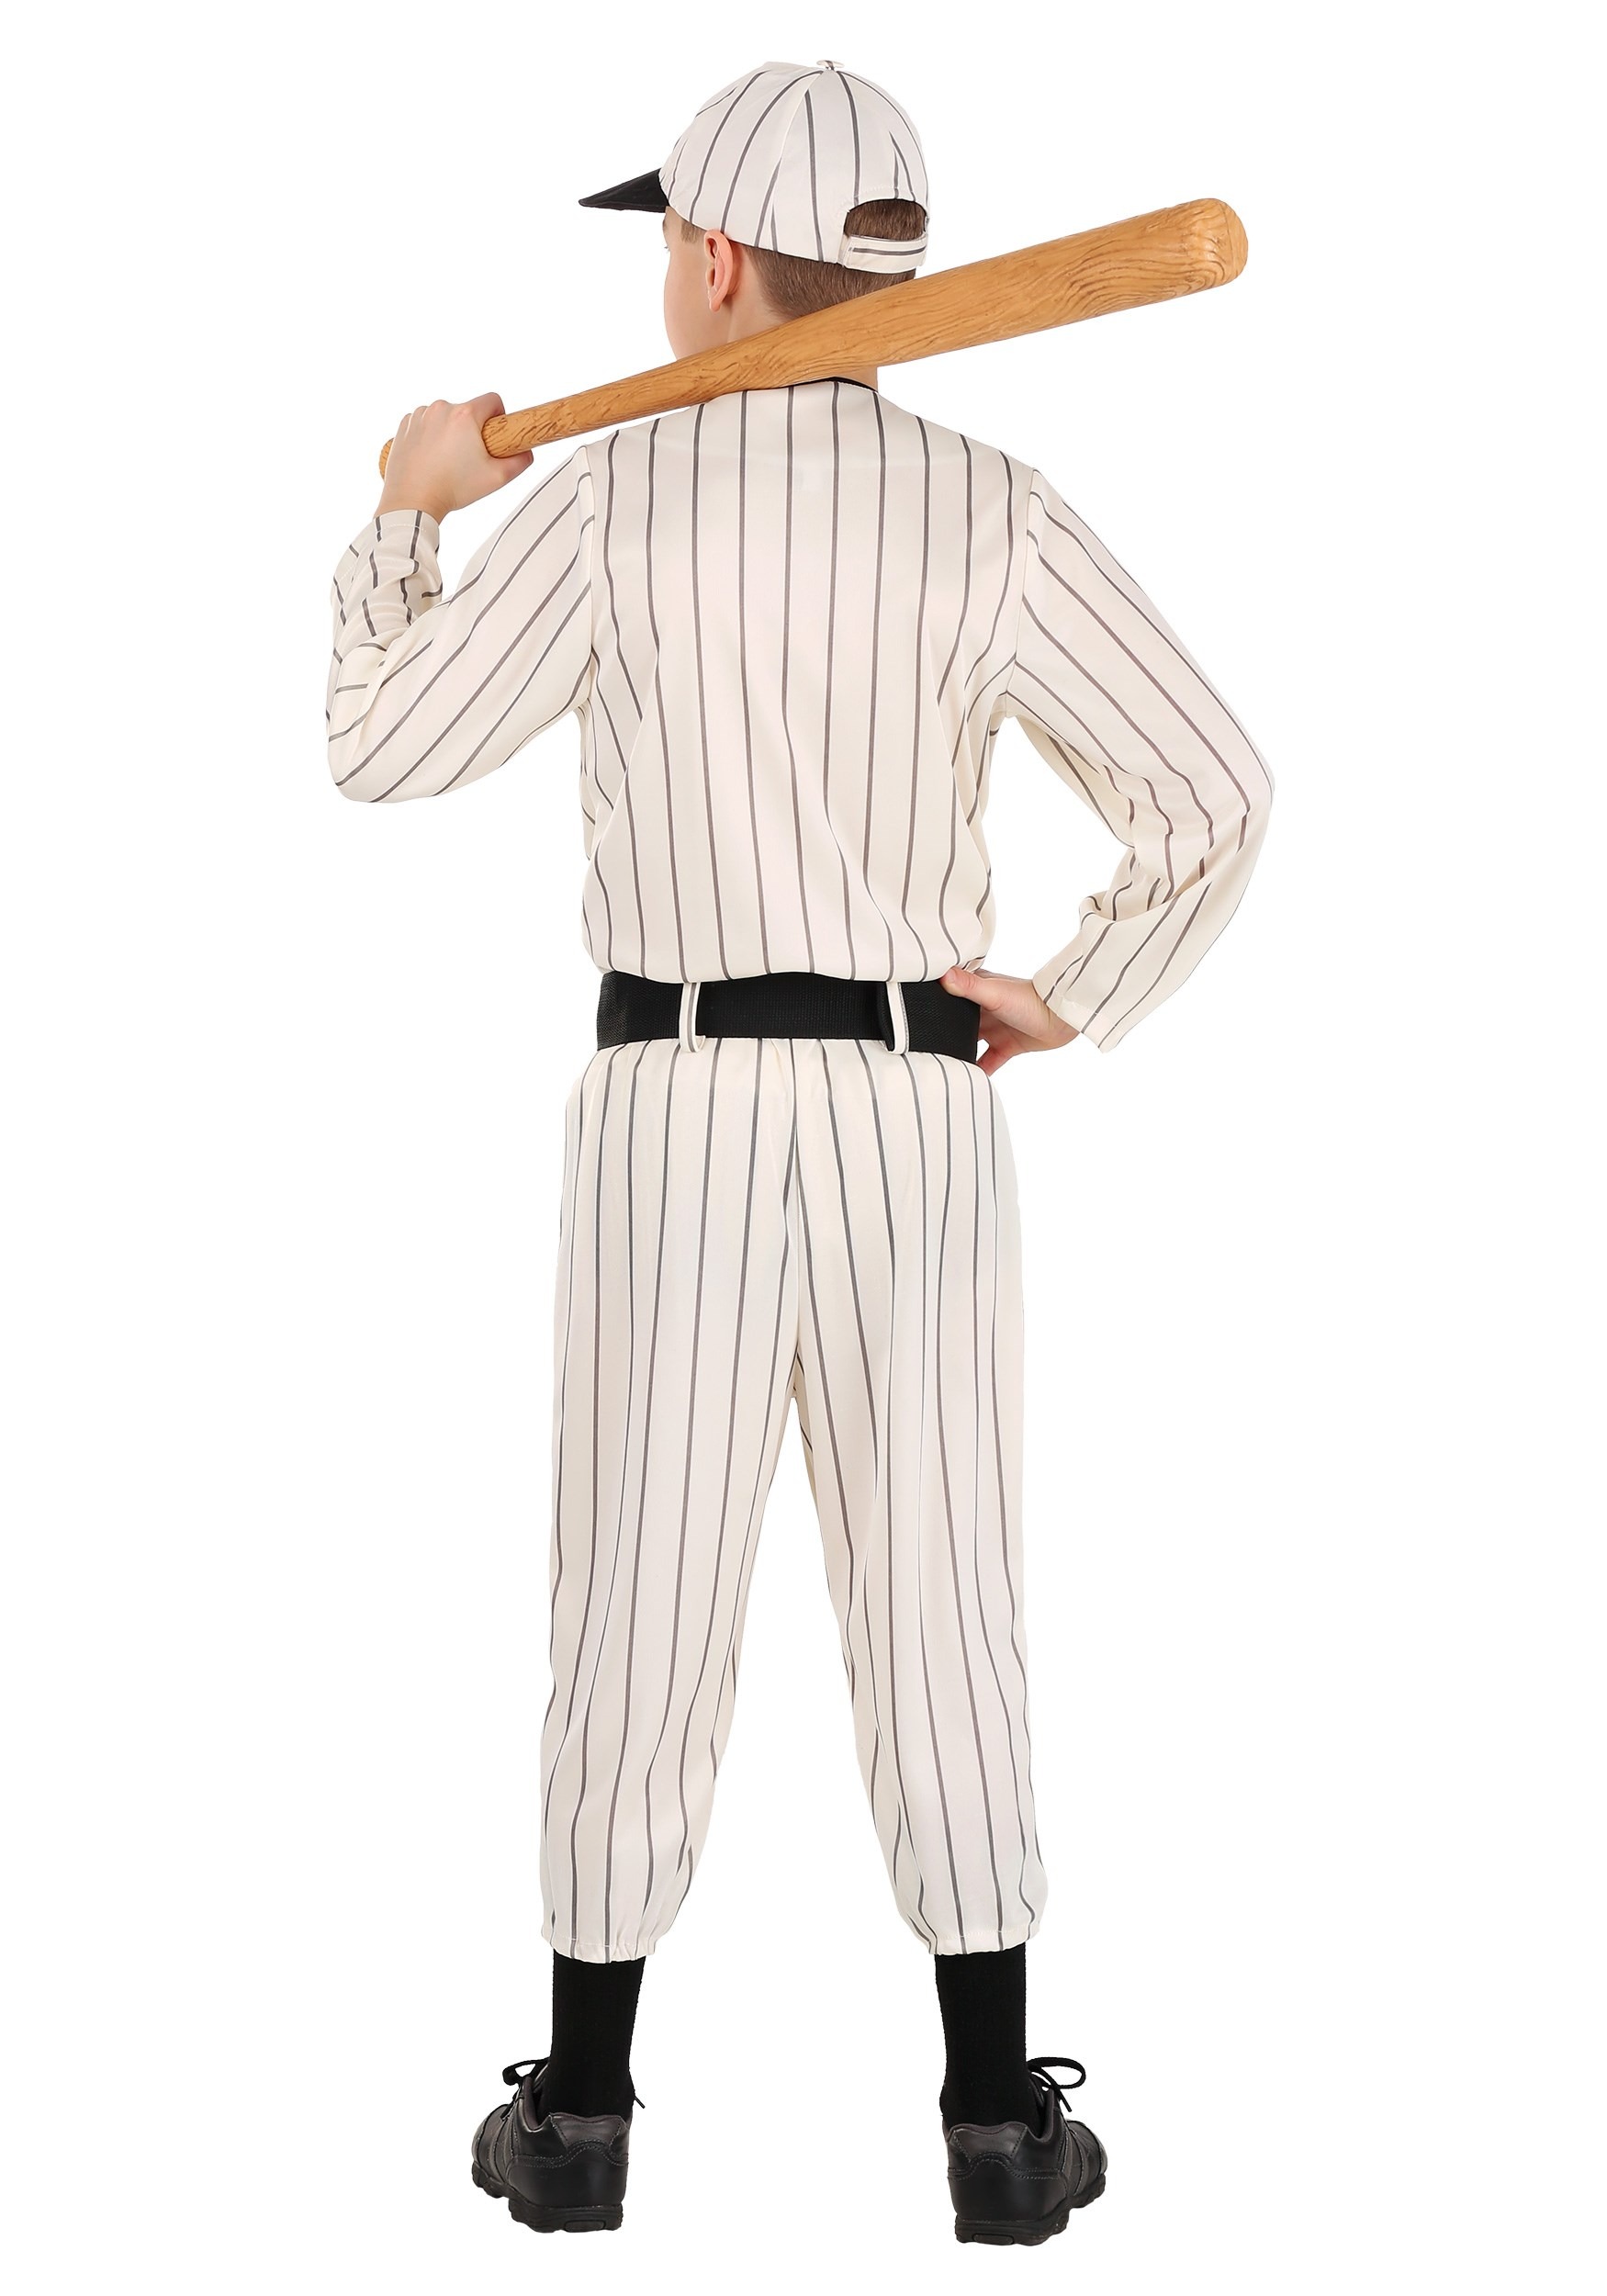 baseball player costume boy